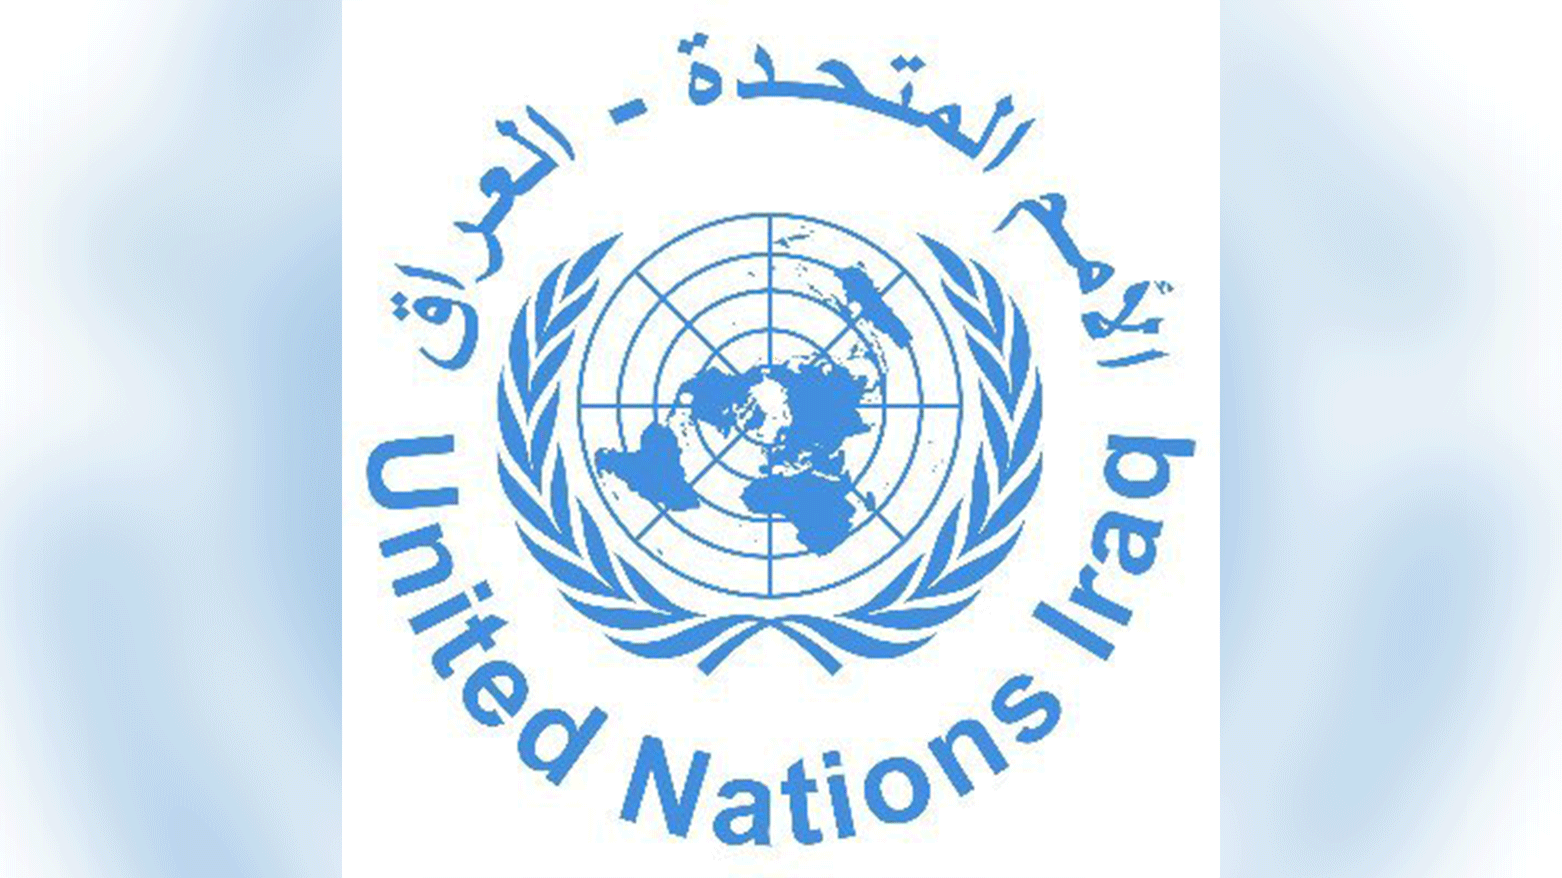 United Nations Assistance Mission in Iraq (UNAMI) logo. (Photo: UNAMI)